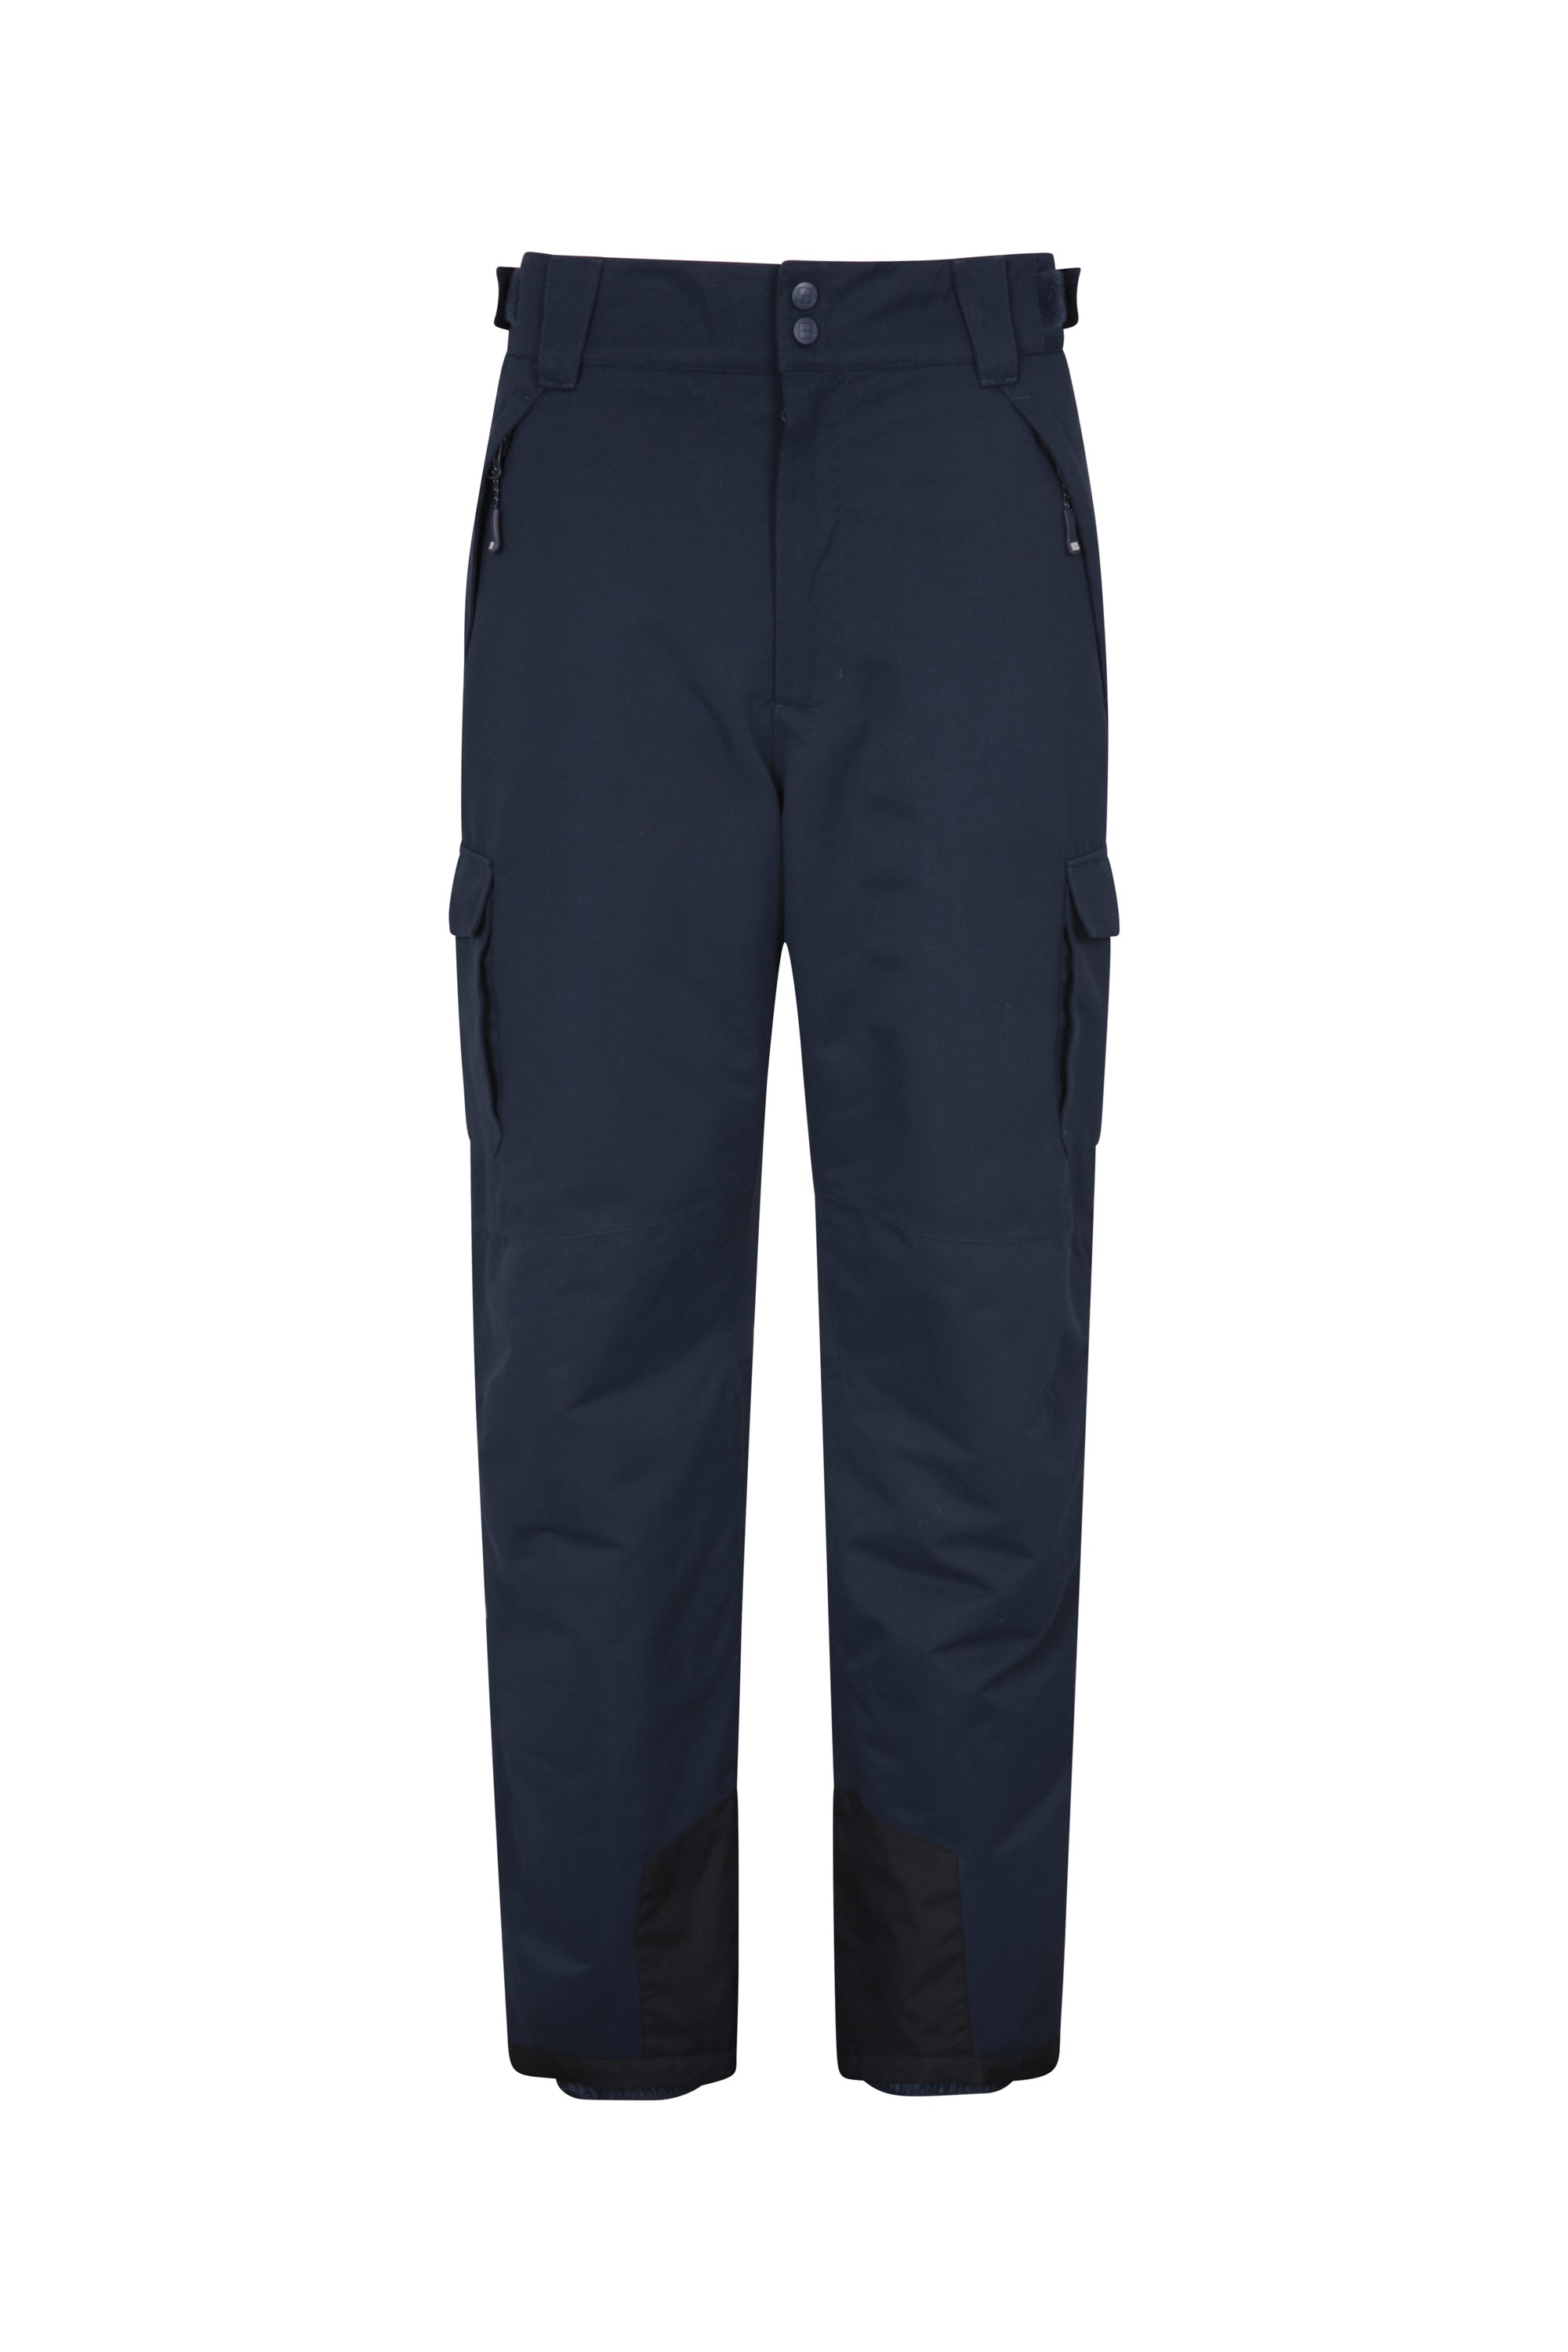 Pantalon de Snowboard Hommes Luna II - Court - Bleu Marine